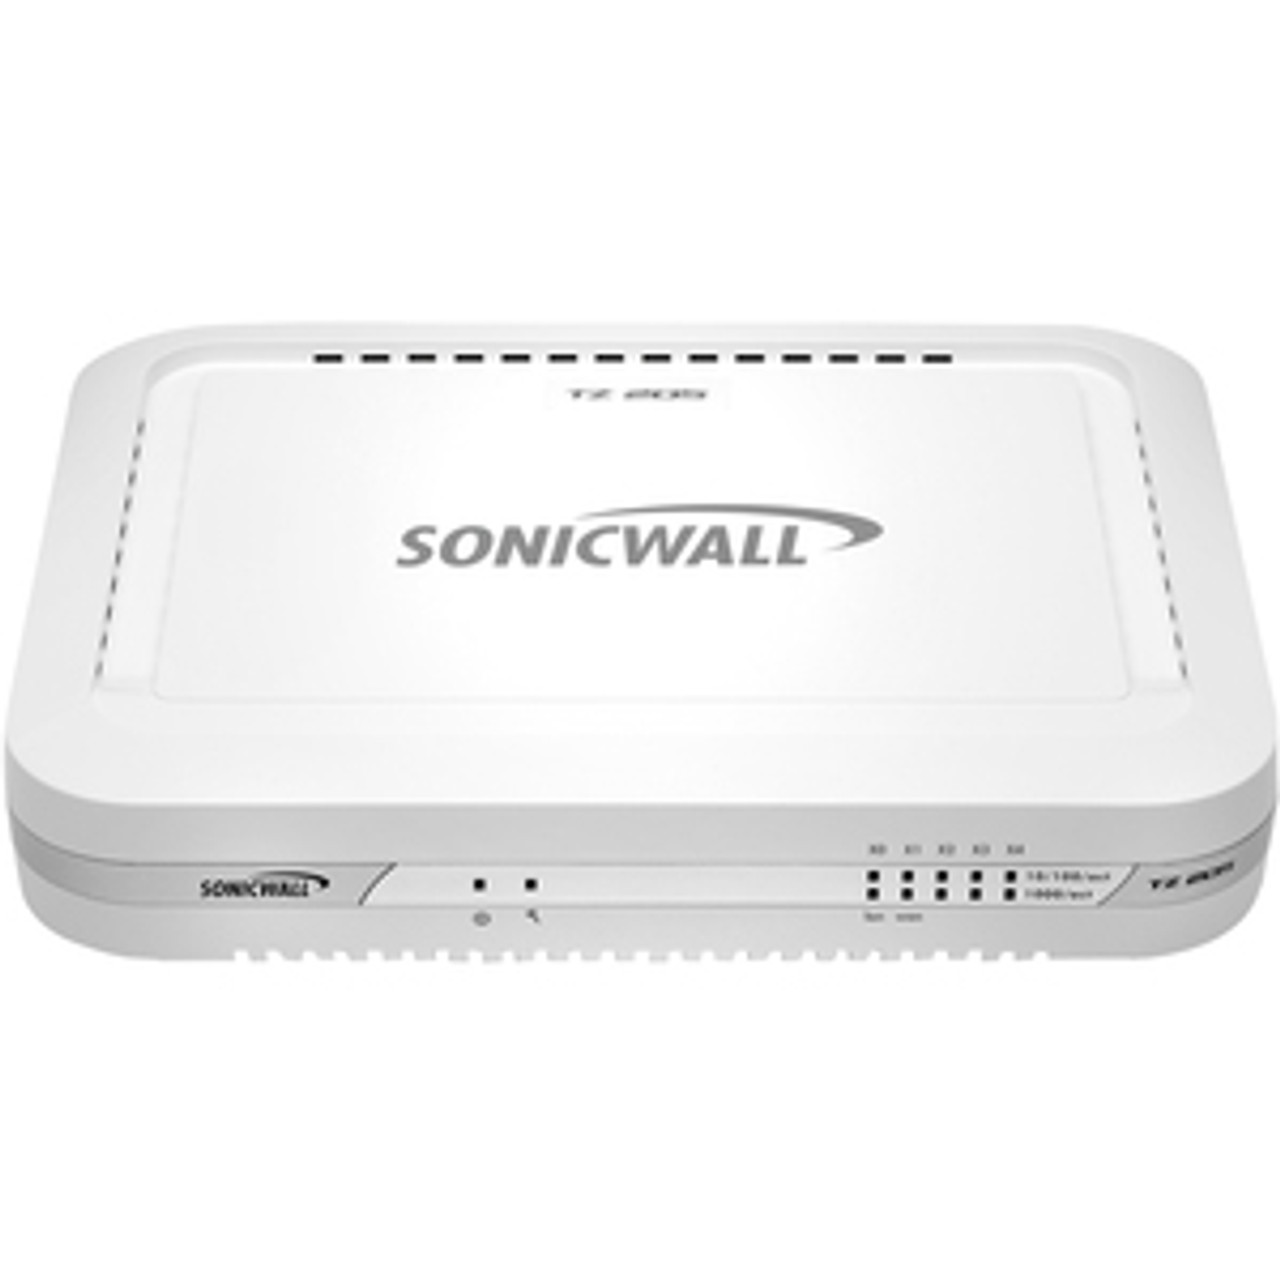 01-SSC-4885 SonicWall Hardware TZ 205 Secure Upgrade Plus 3 Y Intrusion Prevention 5 Port Gigabit Ethernet Desktop (Refurbished)